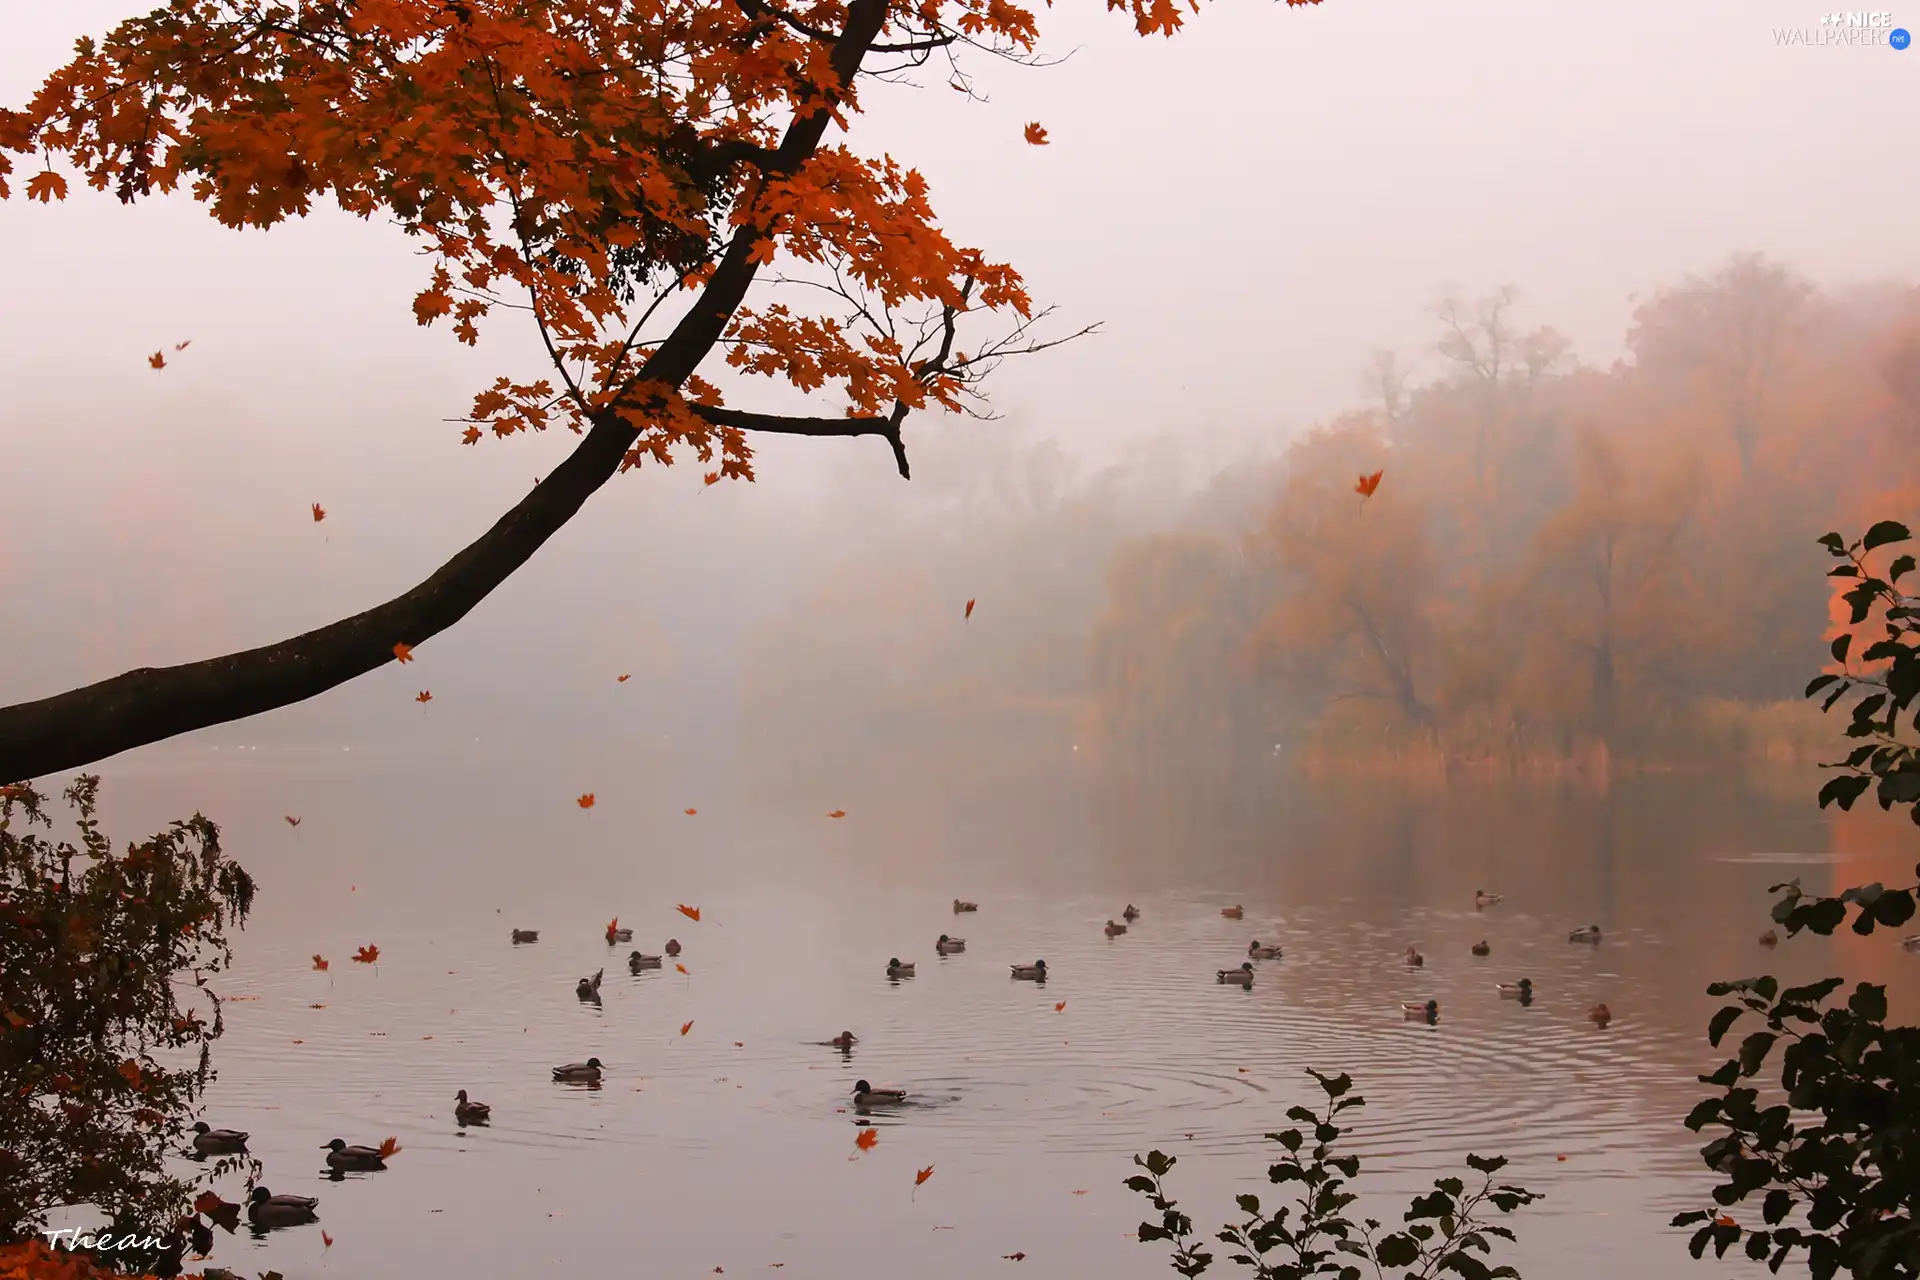 ducks, Fog, Falling, Leaf, trees, lake